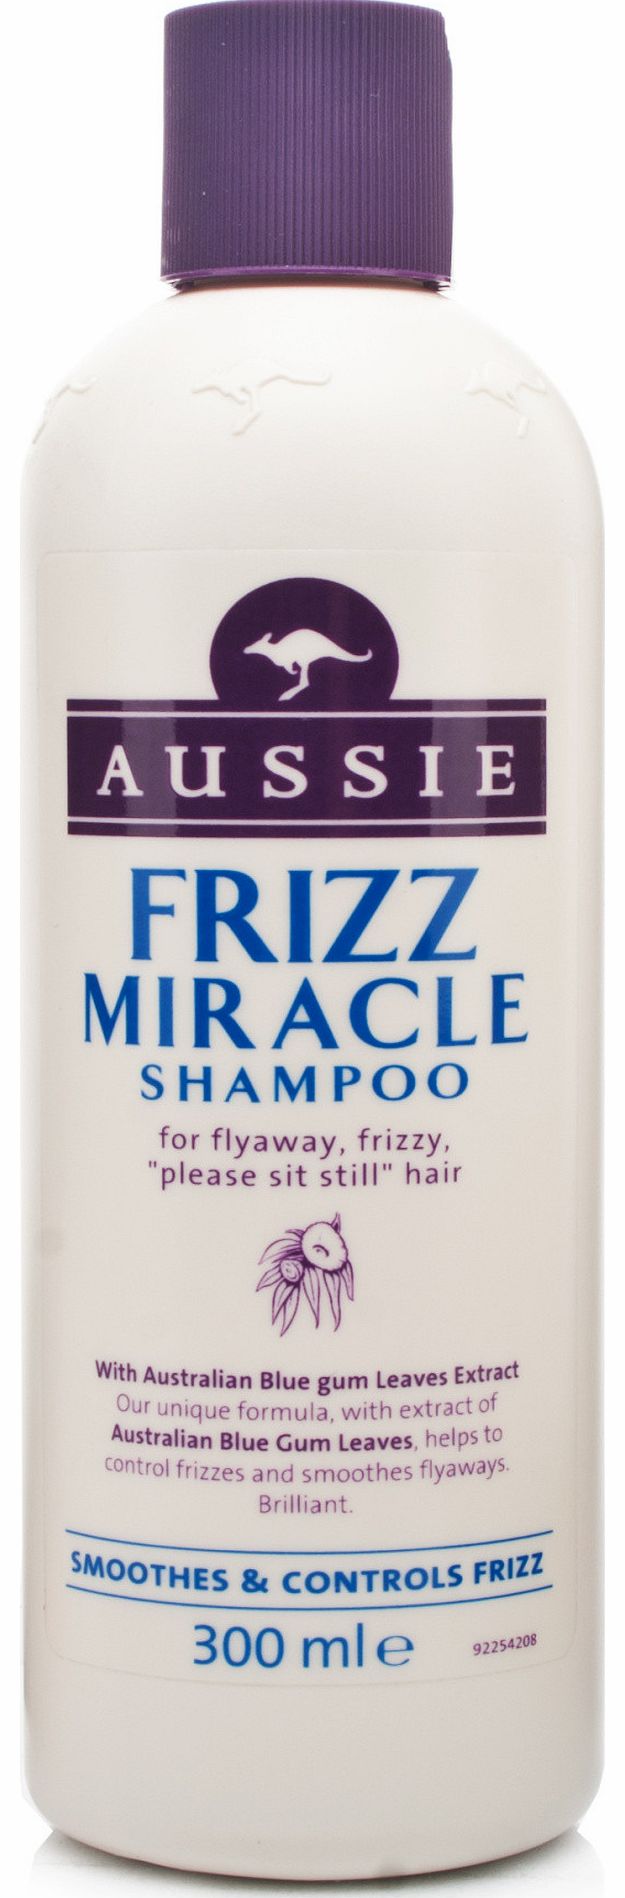 Frizz Miracle Shampoo